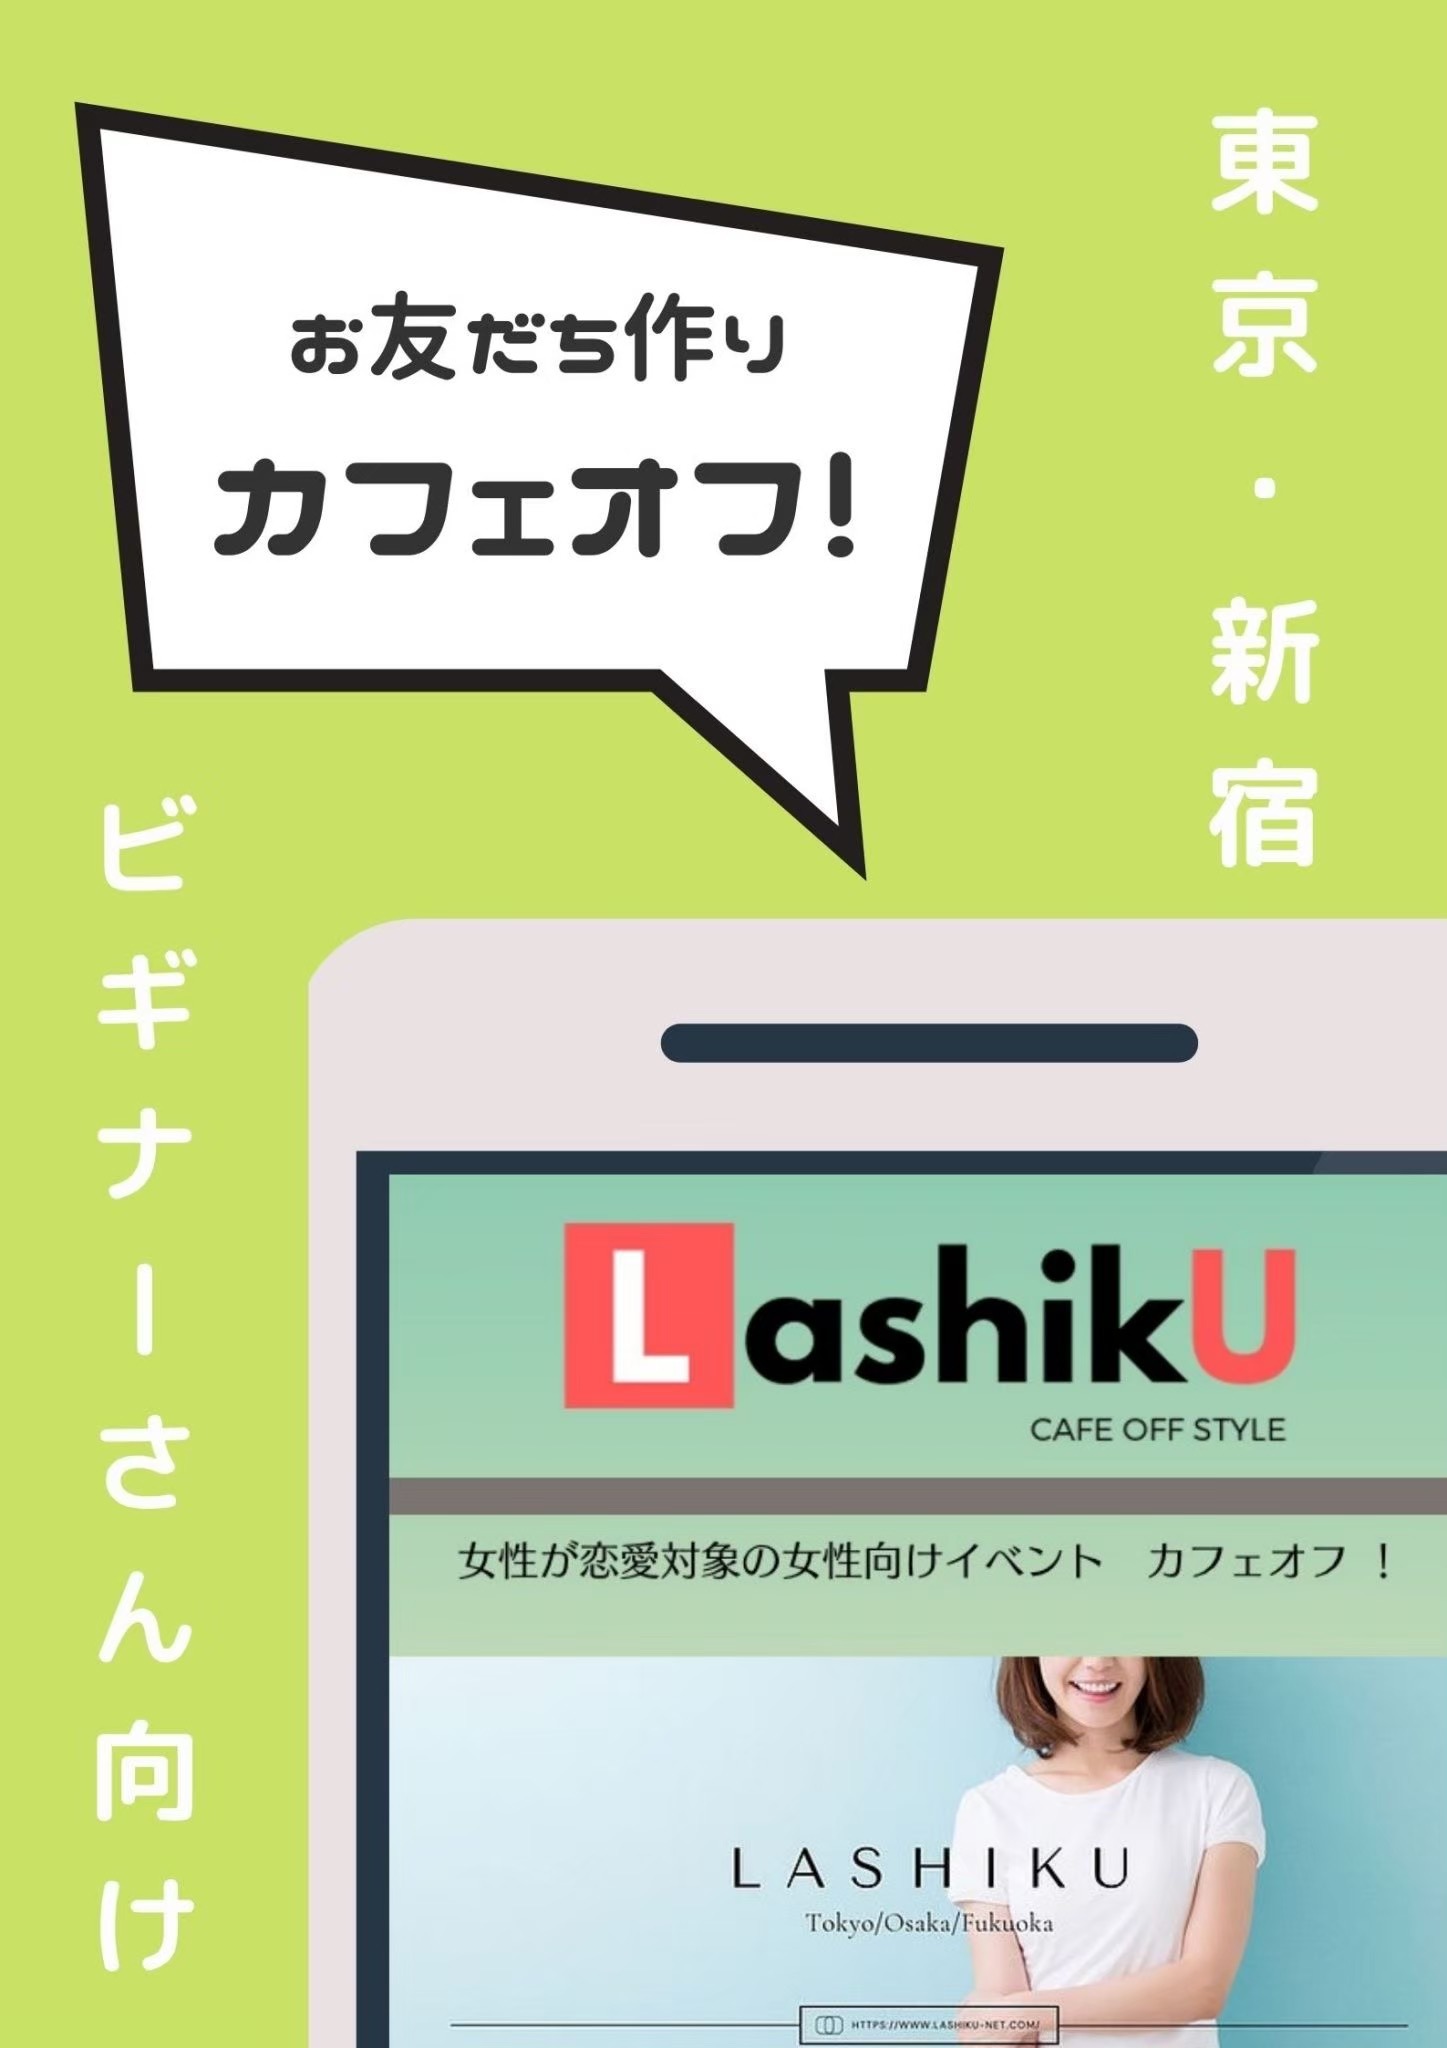 【LashikU】女性との恋愛初心者さん向けカフェオフ＠東京